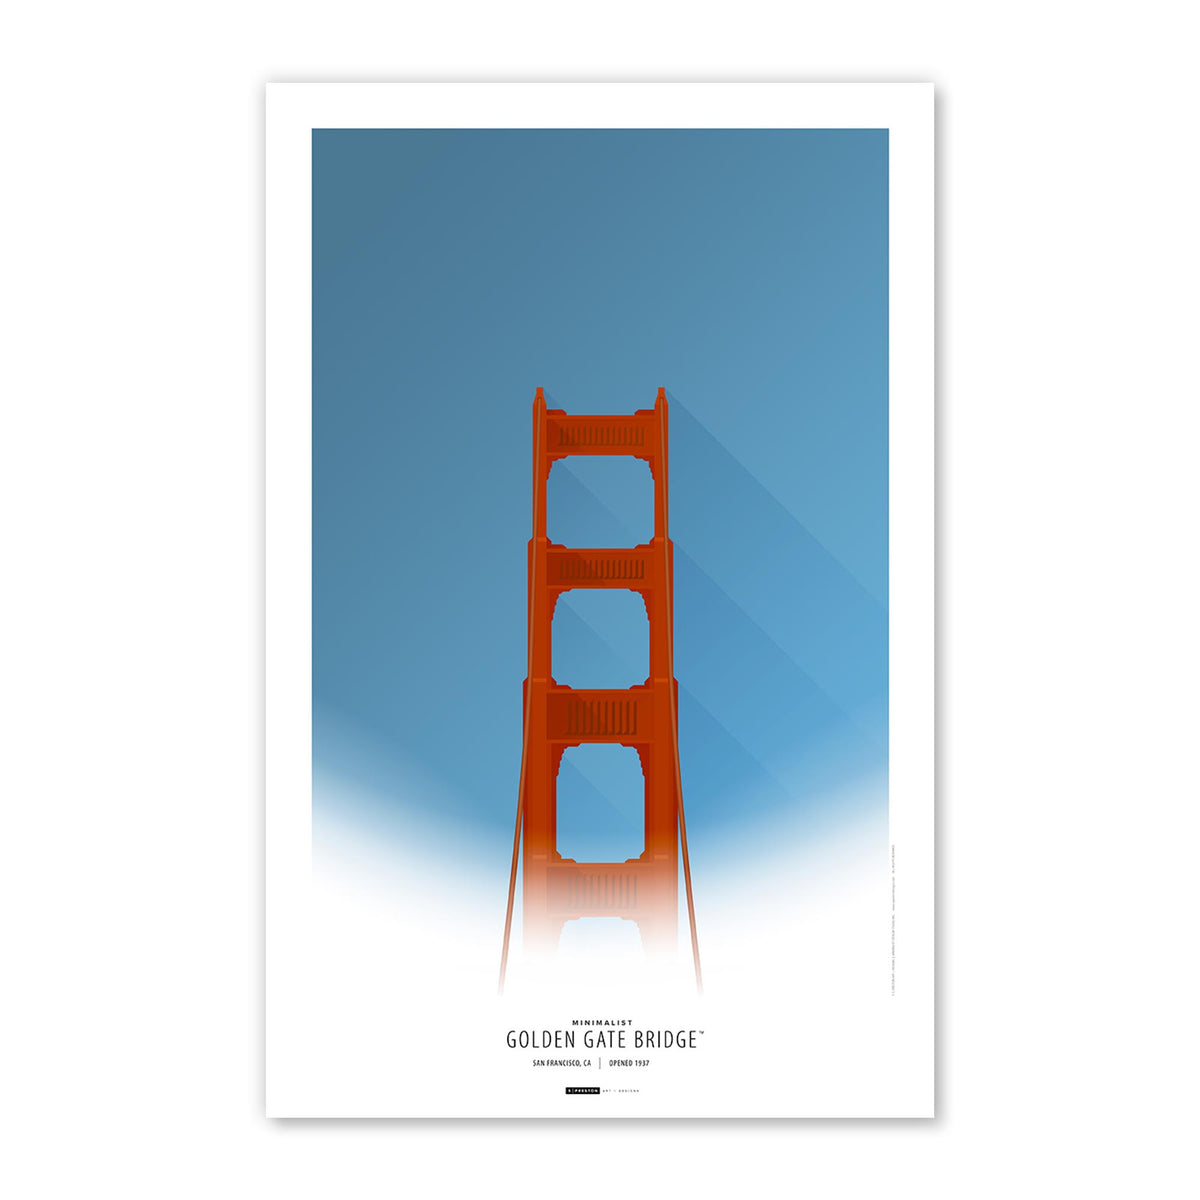 Minimalist Golden Gate Bridge Poster Print - San Francisco